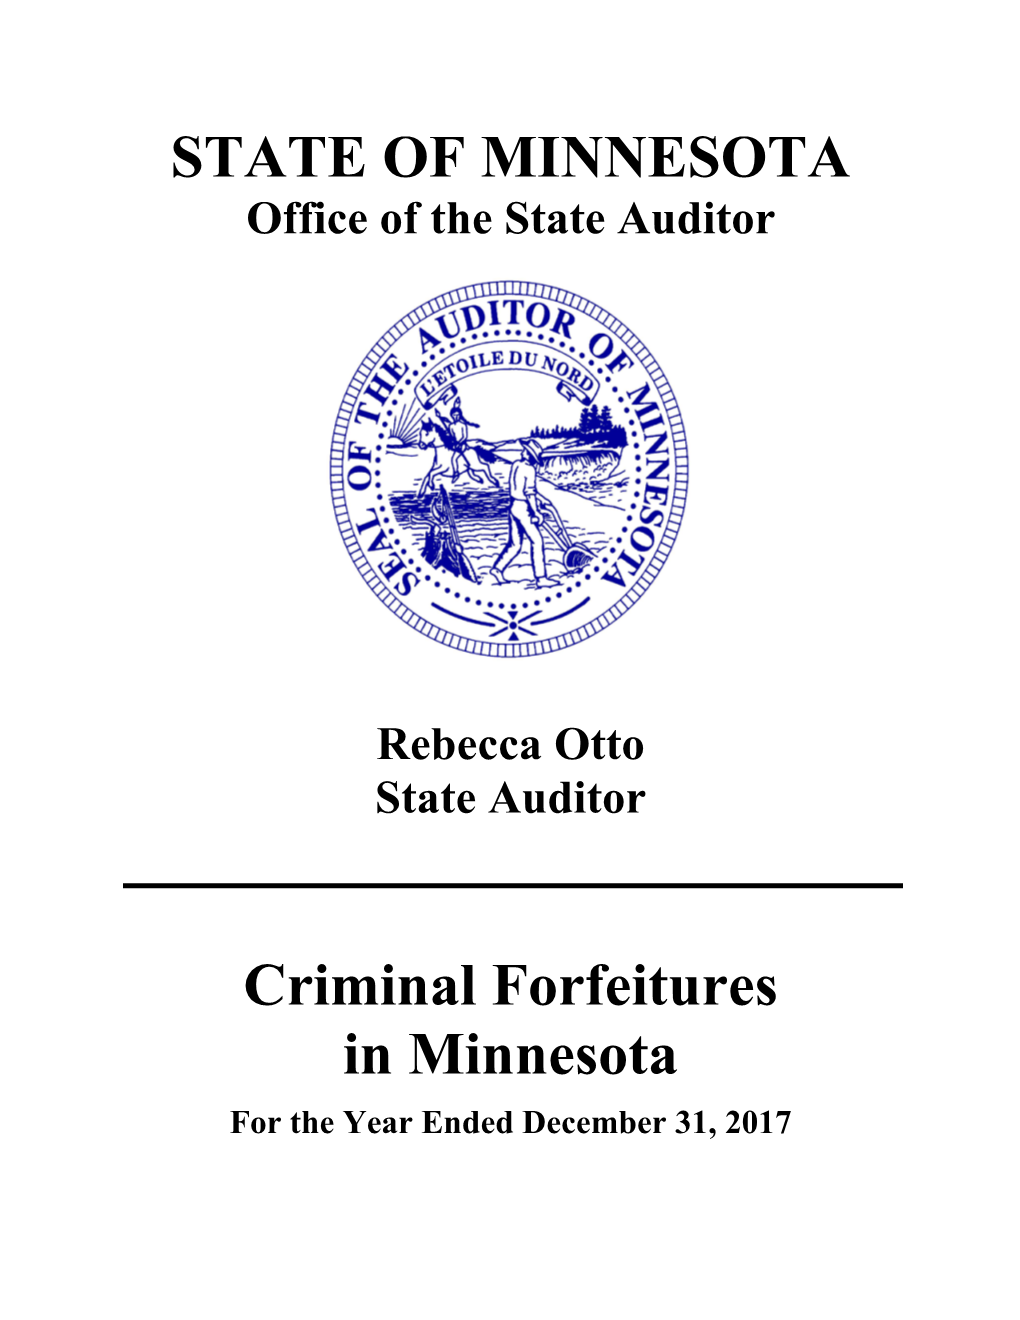 2017 Criminal Forfeitures in Minnesota